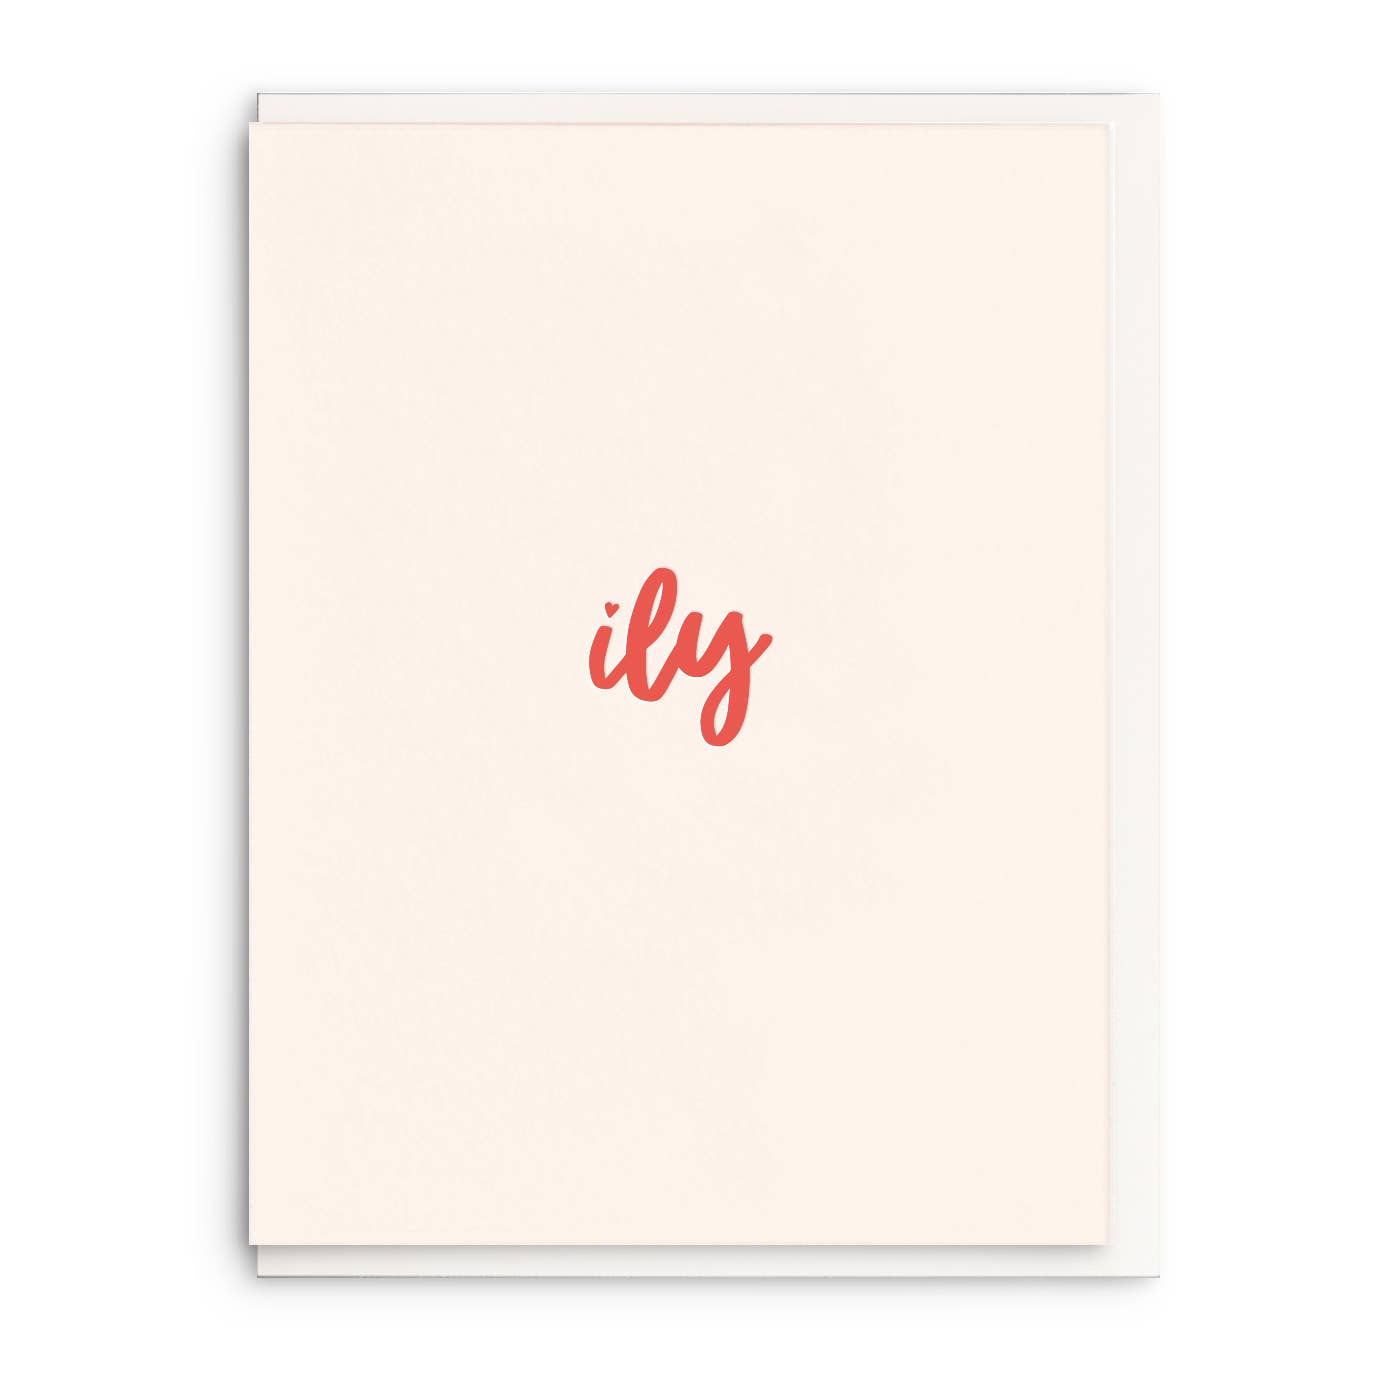 ily: i love you - Letterpress Love Greeting Card